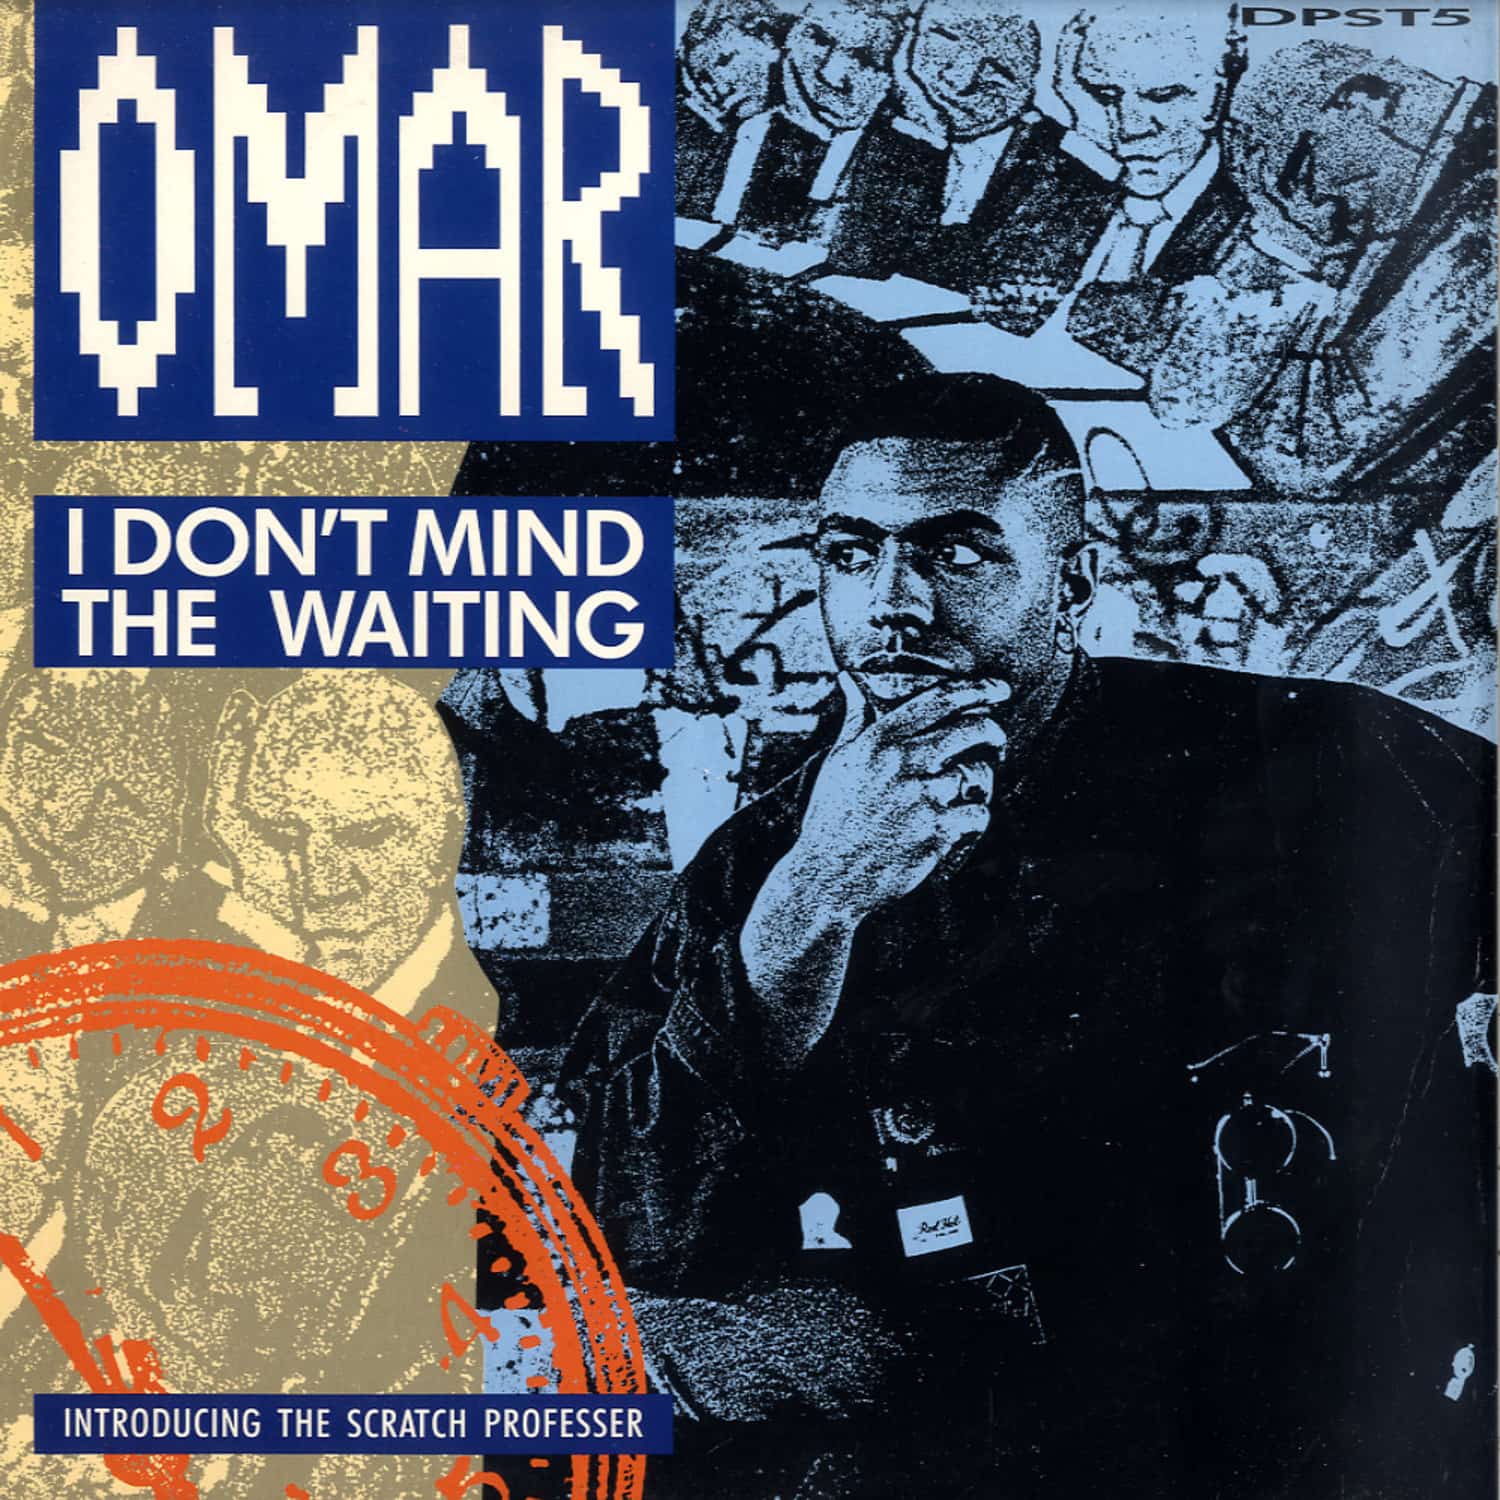 Omar - I DONT MIND THE WAITING